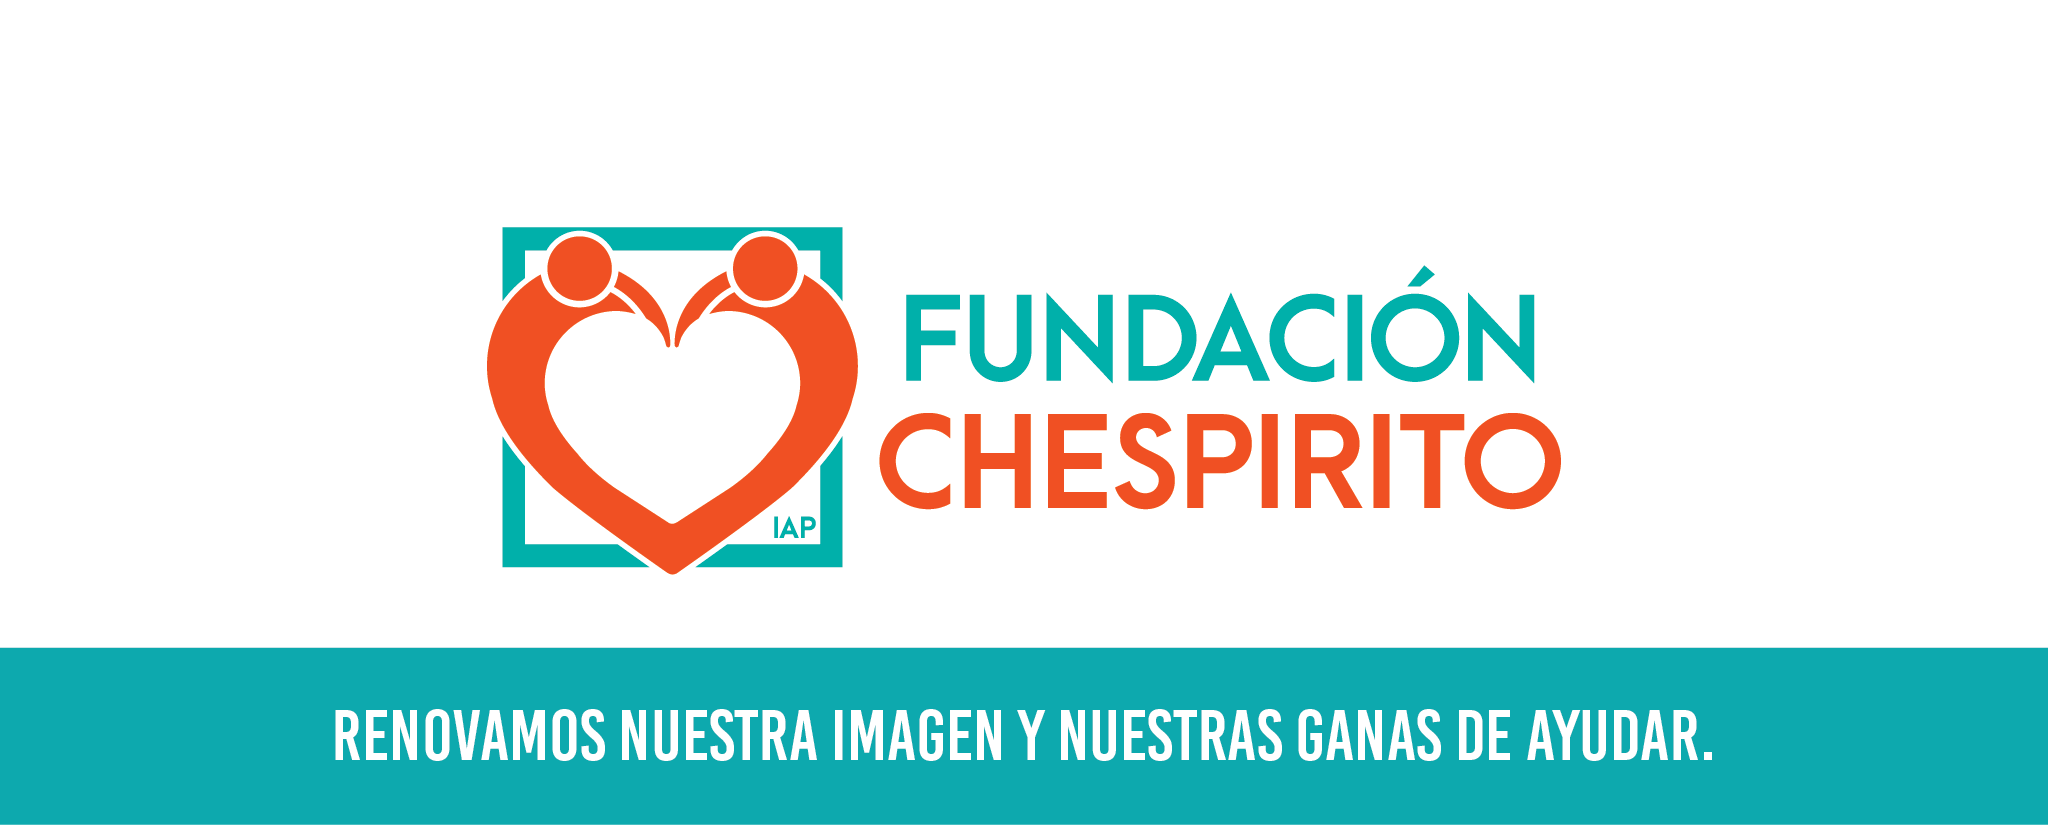 Fundación Chespirito IAP: siempre ha visto por la niñez mexicana